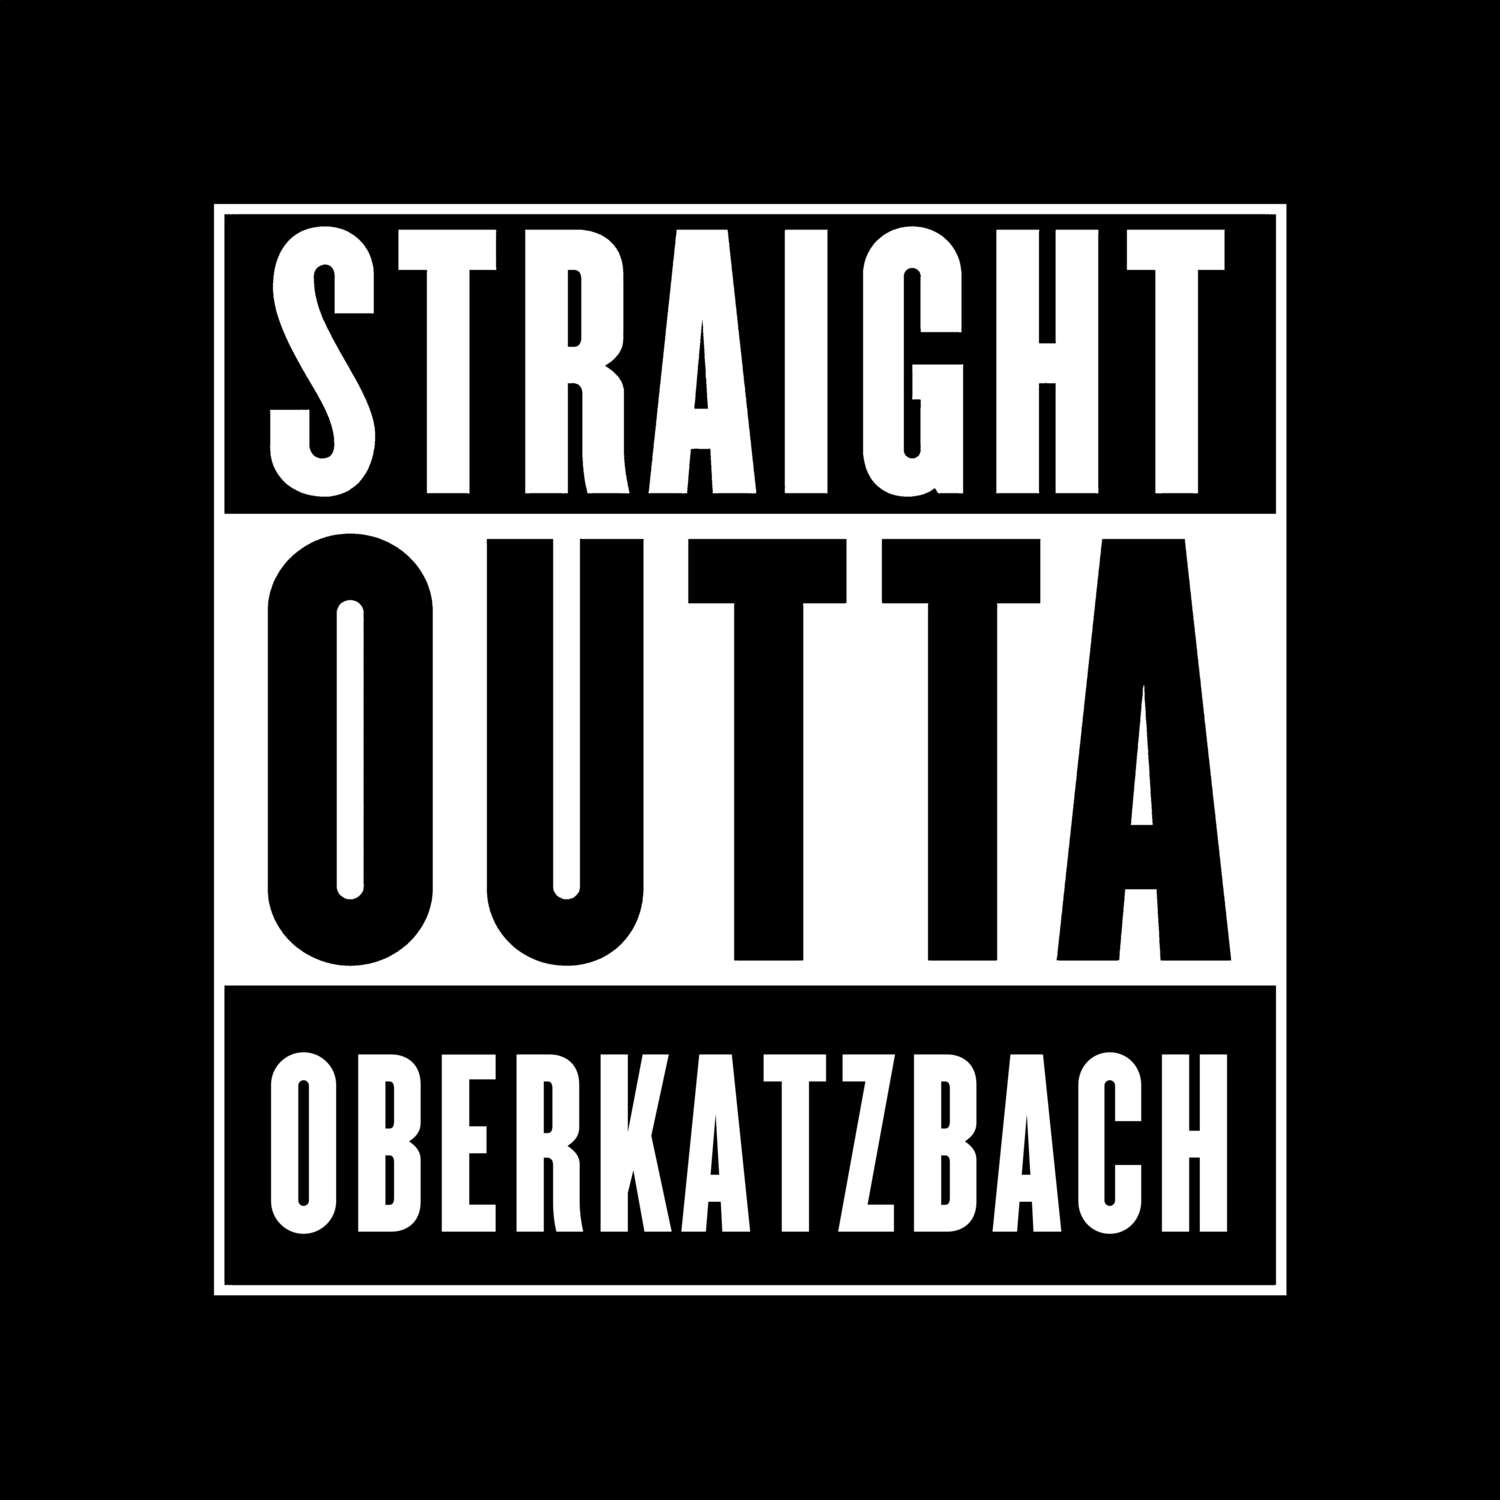 Oberkatzbach T-Shirt »Straight Outta«